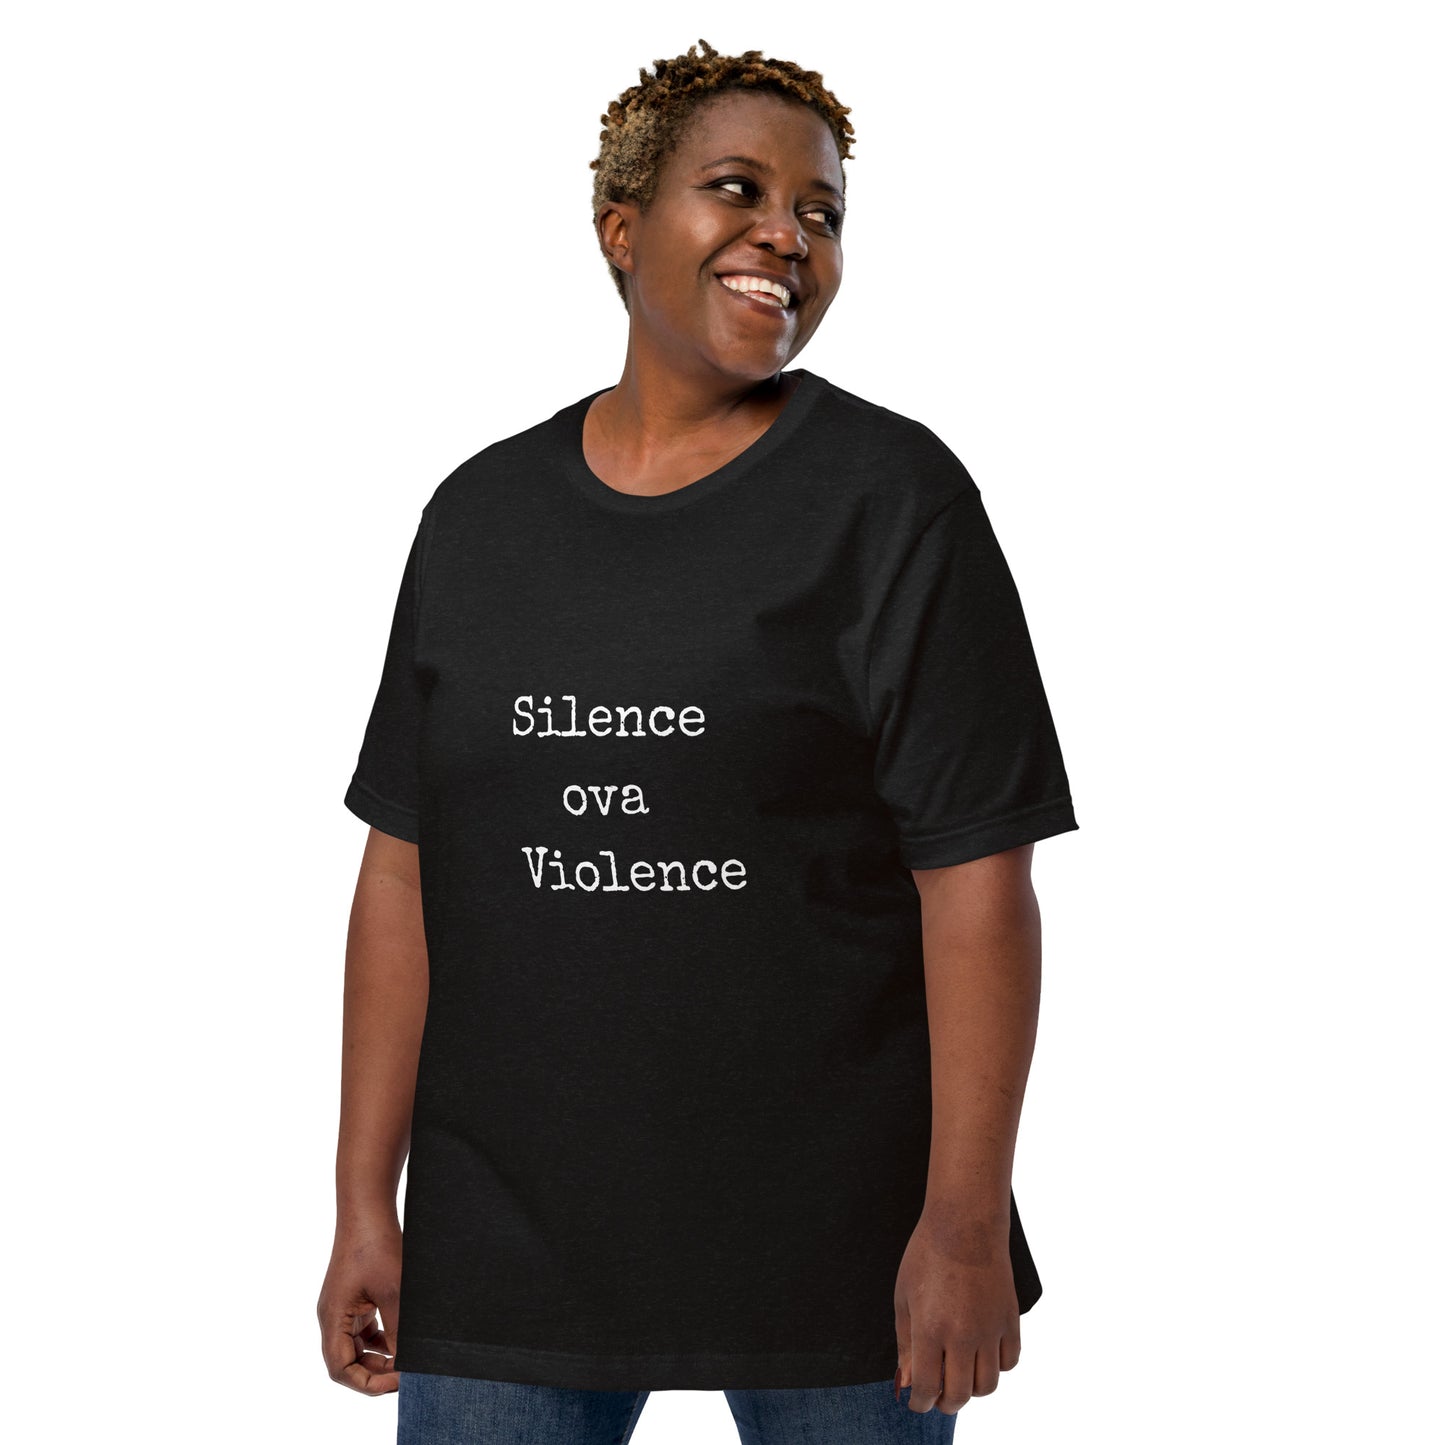 Silence Over Violence Unisex T-shirt